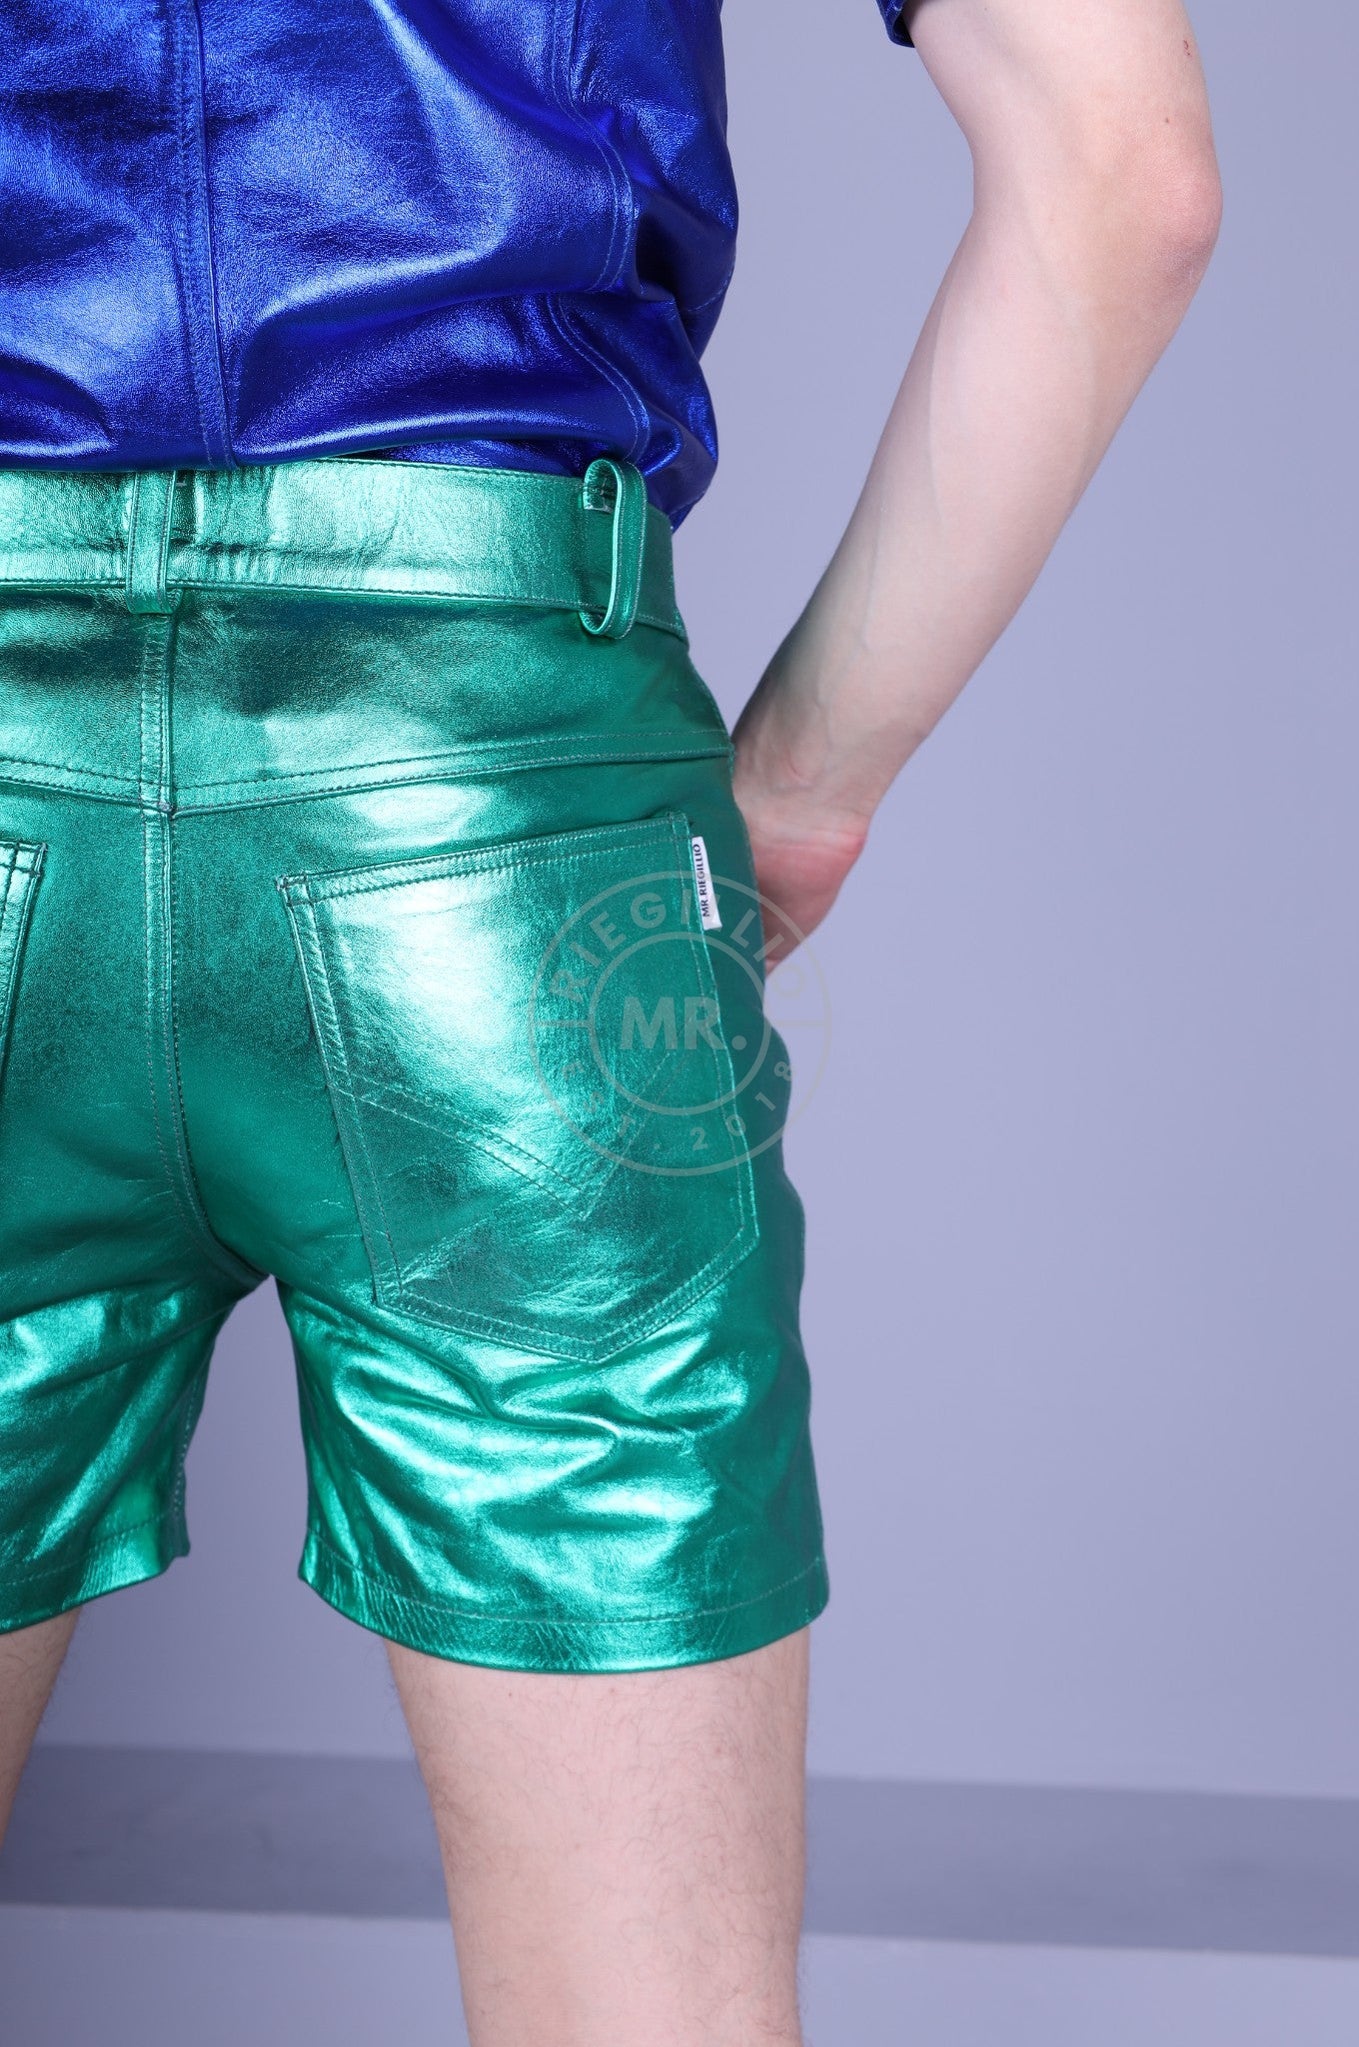 Green Metallic Leather Short at MR. Riegillio